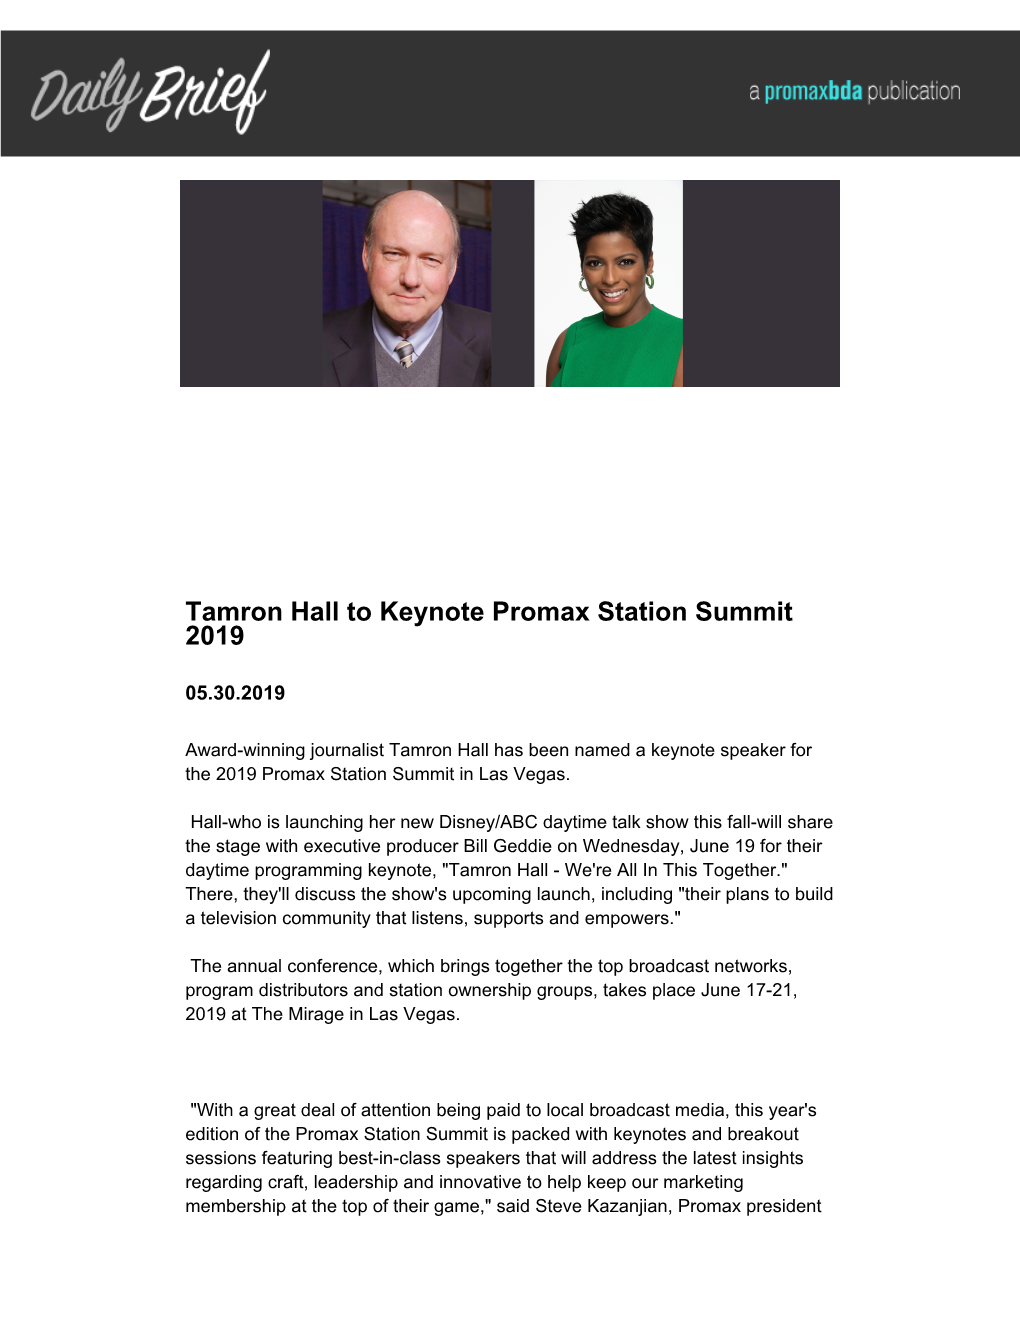 Tamron Hall to Keynote Promax Station Summit 2019